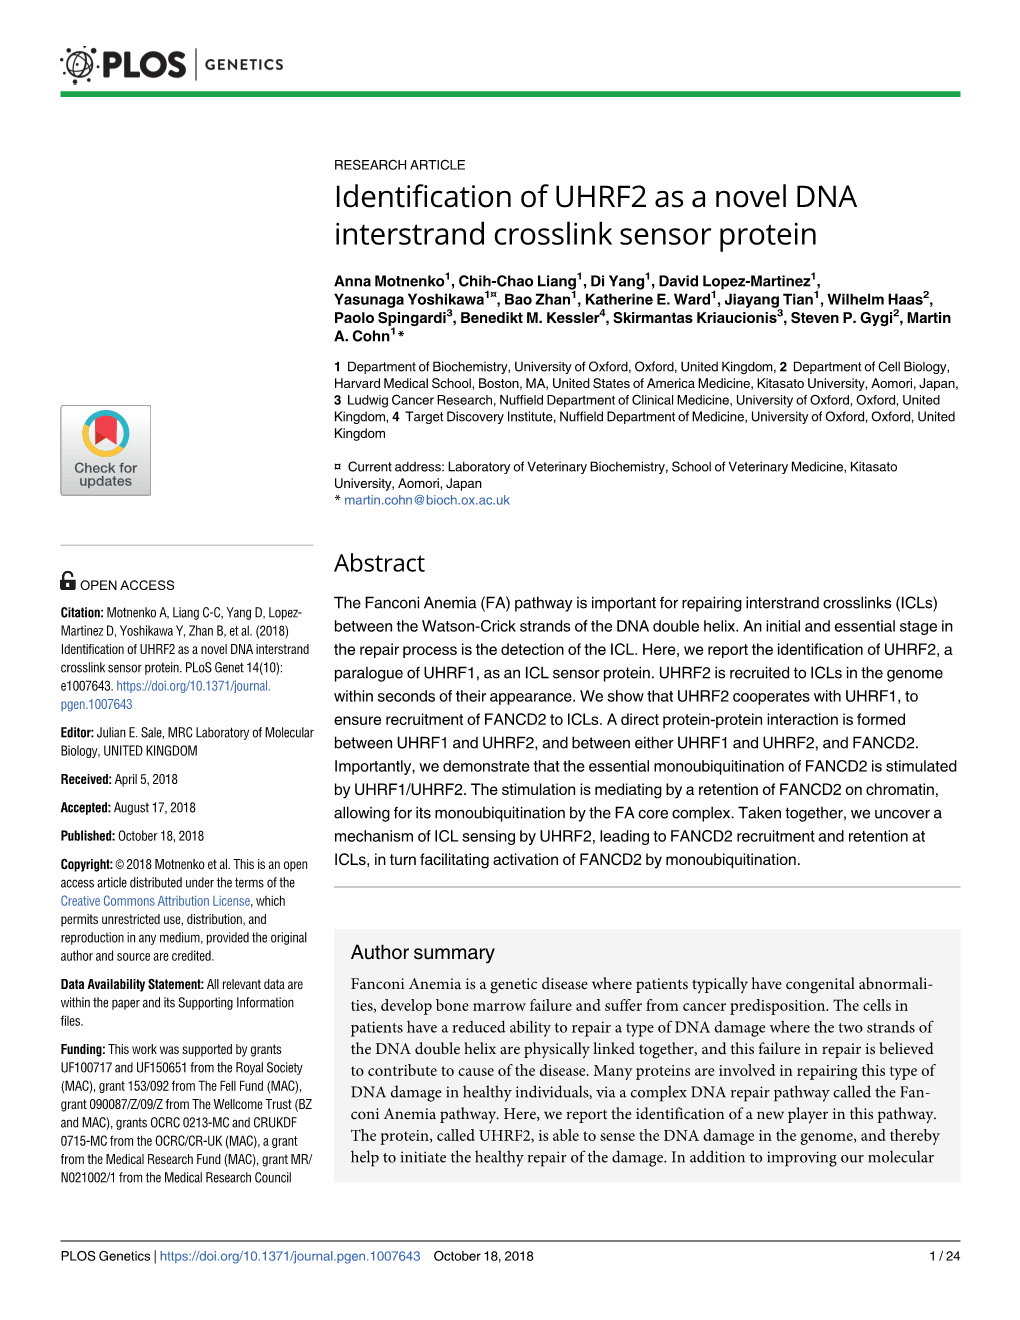 Identification of UHRF2 As a Novel DNA Interstrand Crosslink Sensor Protein